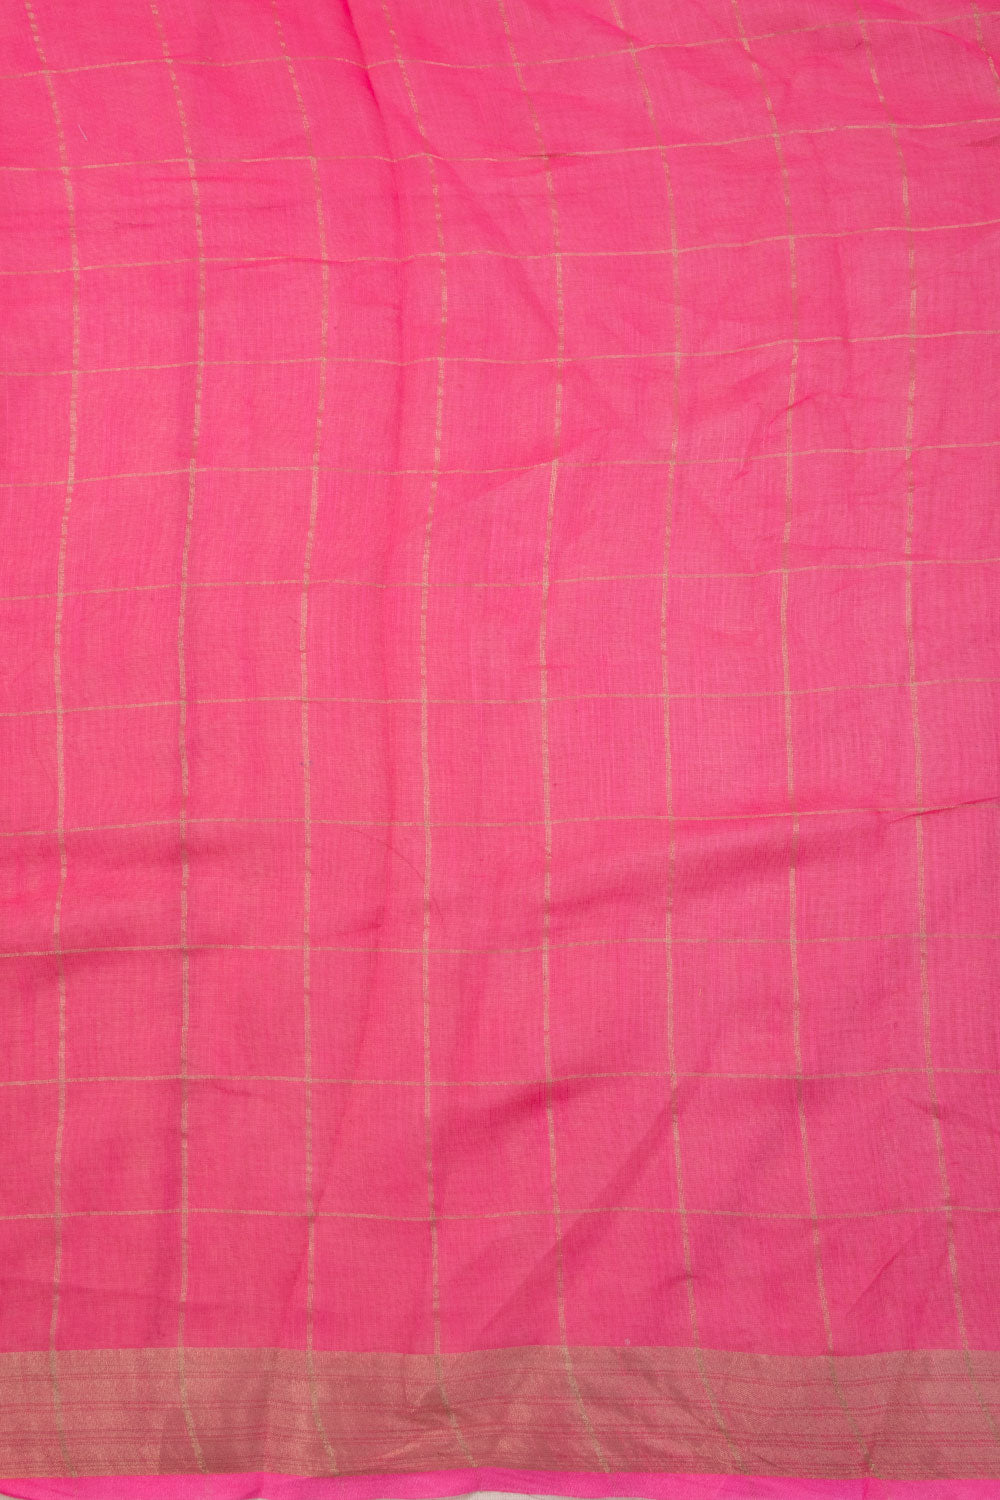 Off White Digital Printed Linen Saree 10070301 - Avishya